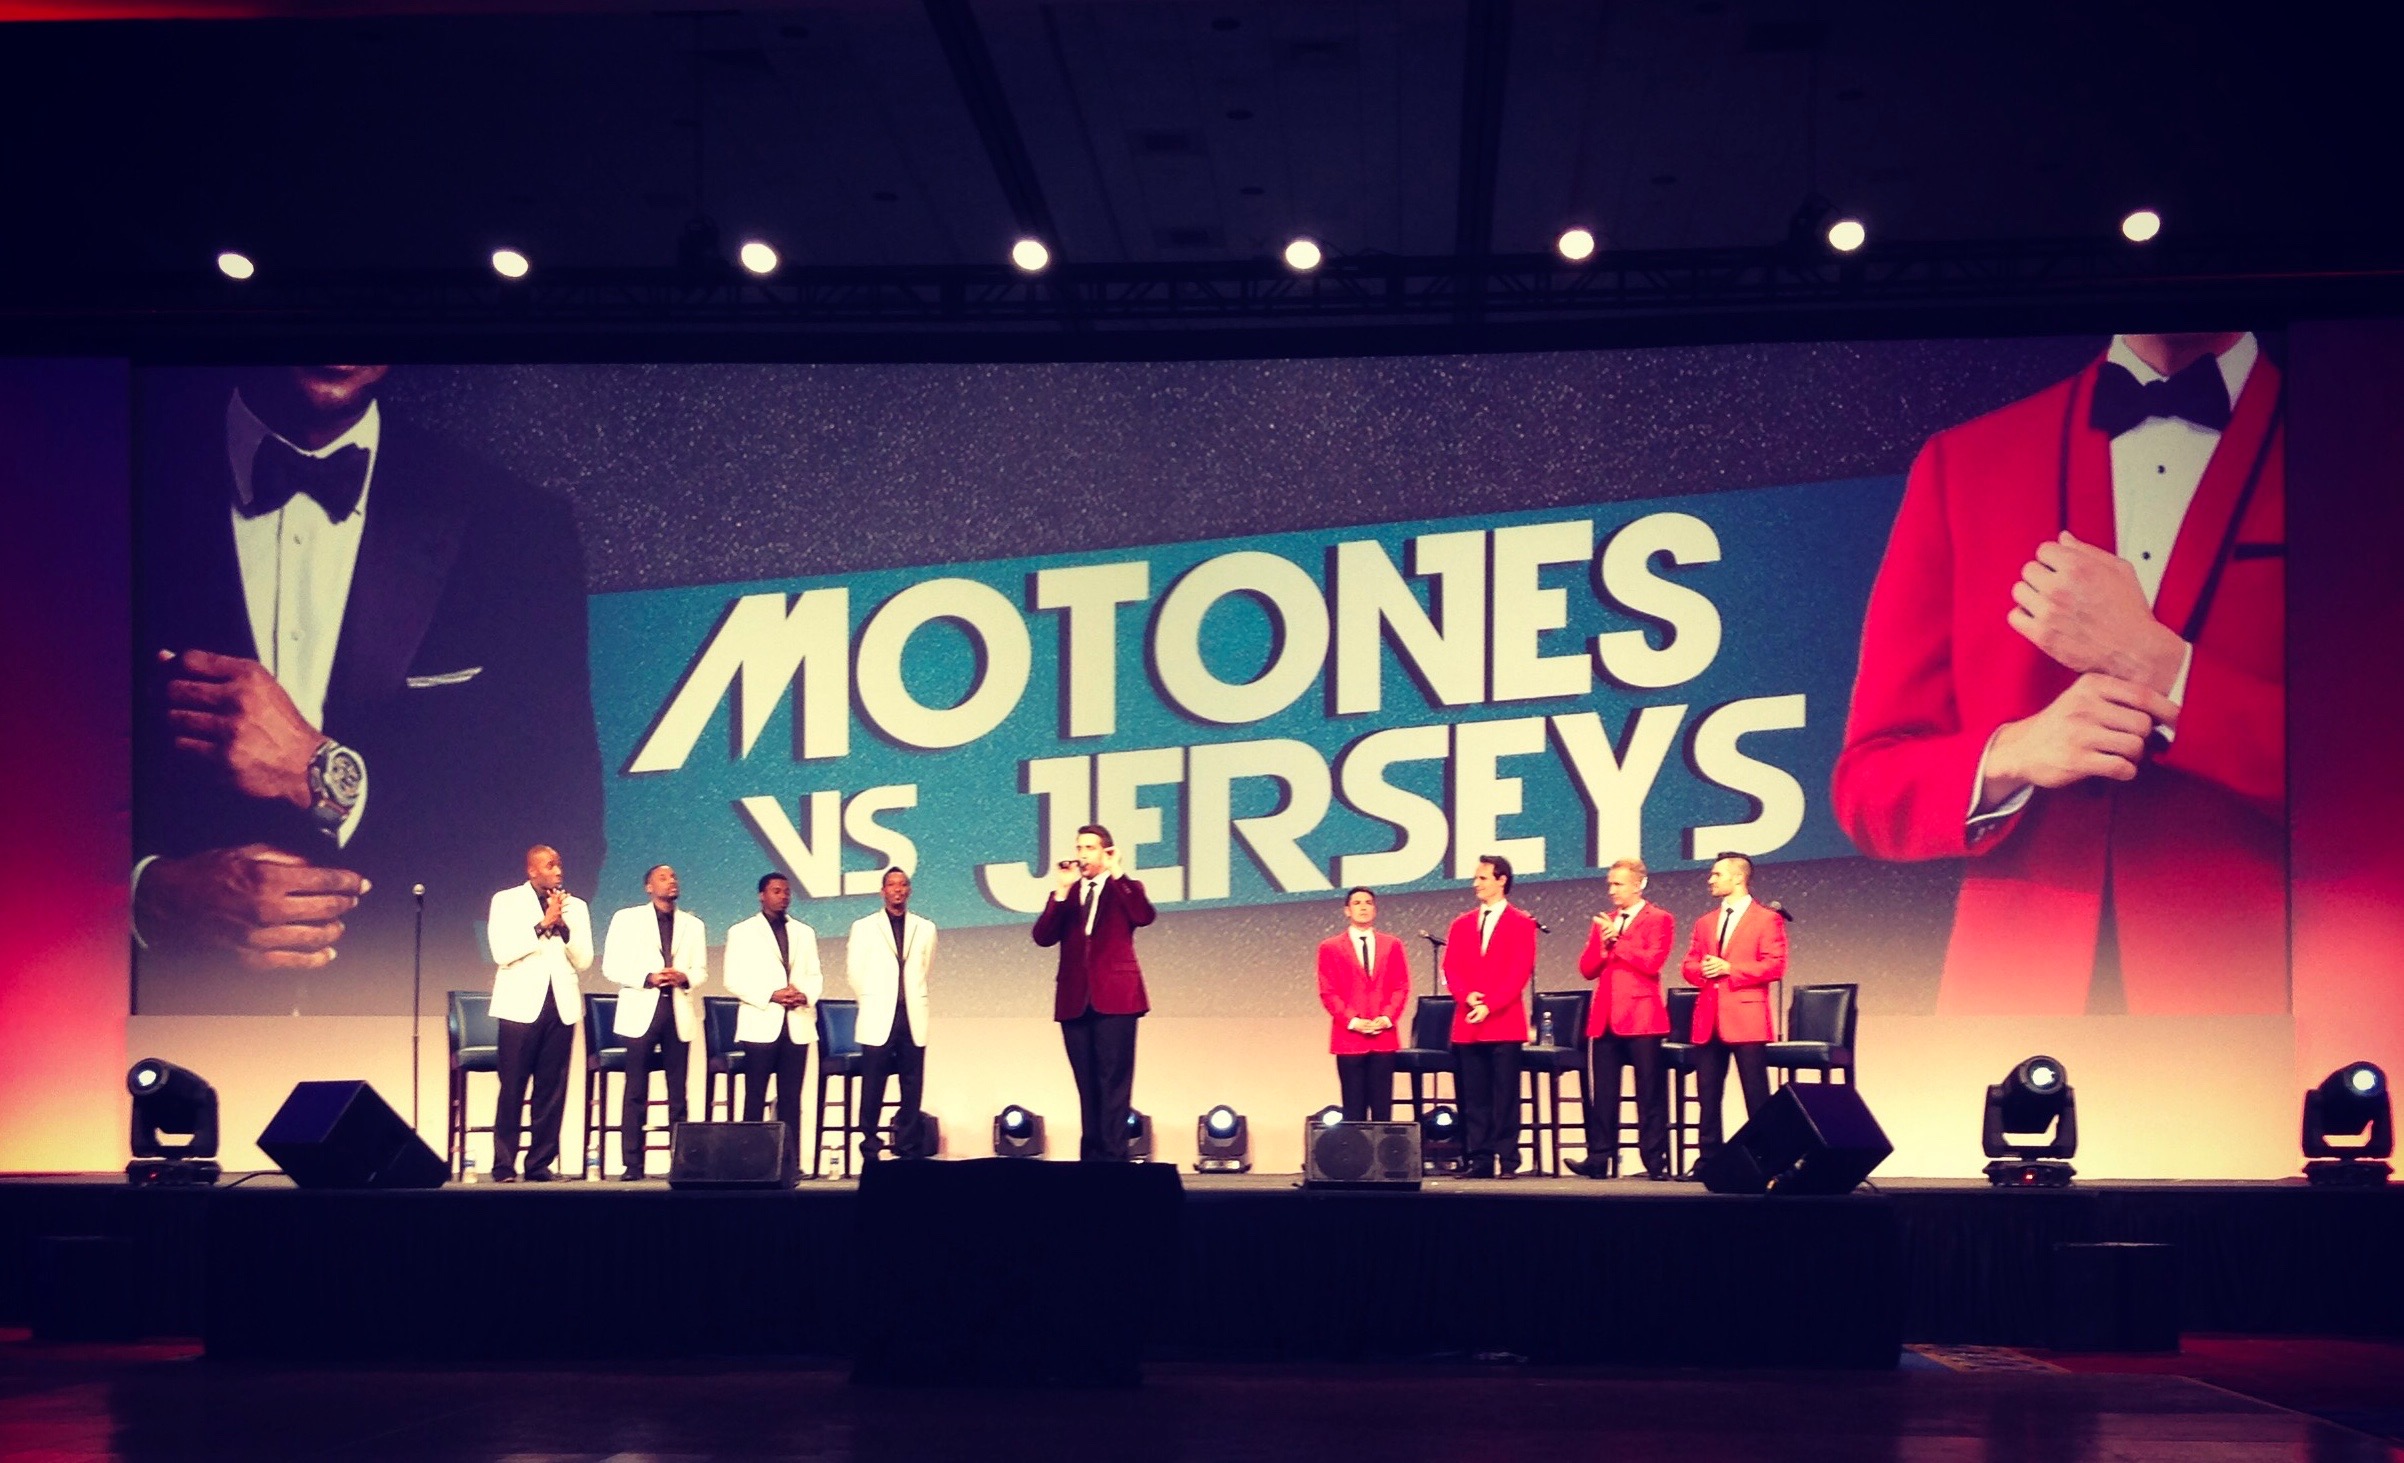 Motones & Jerseys stage photo